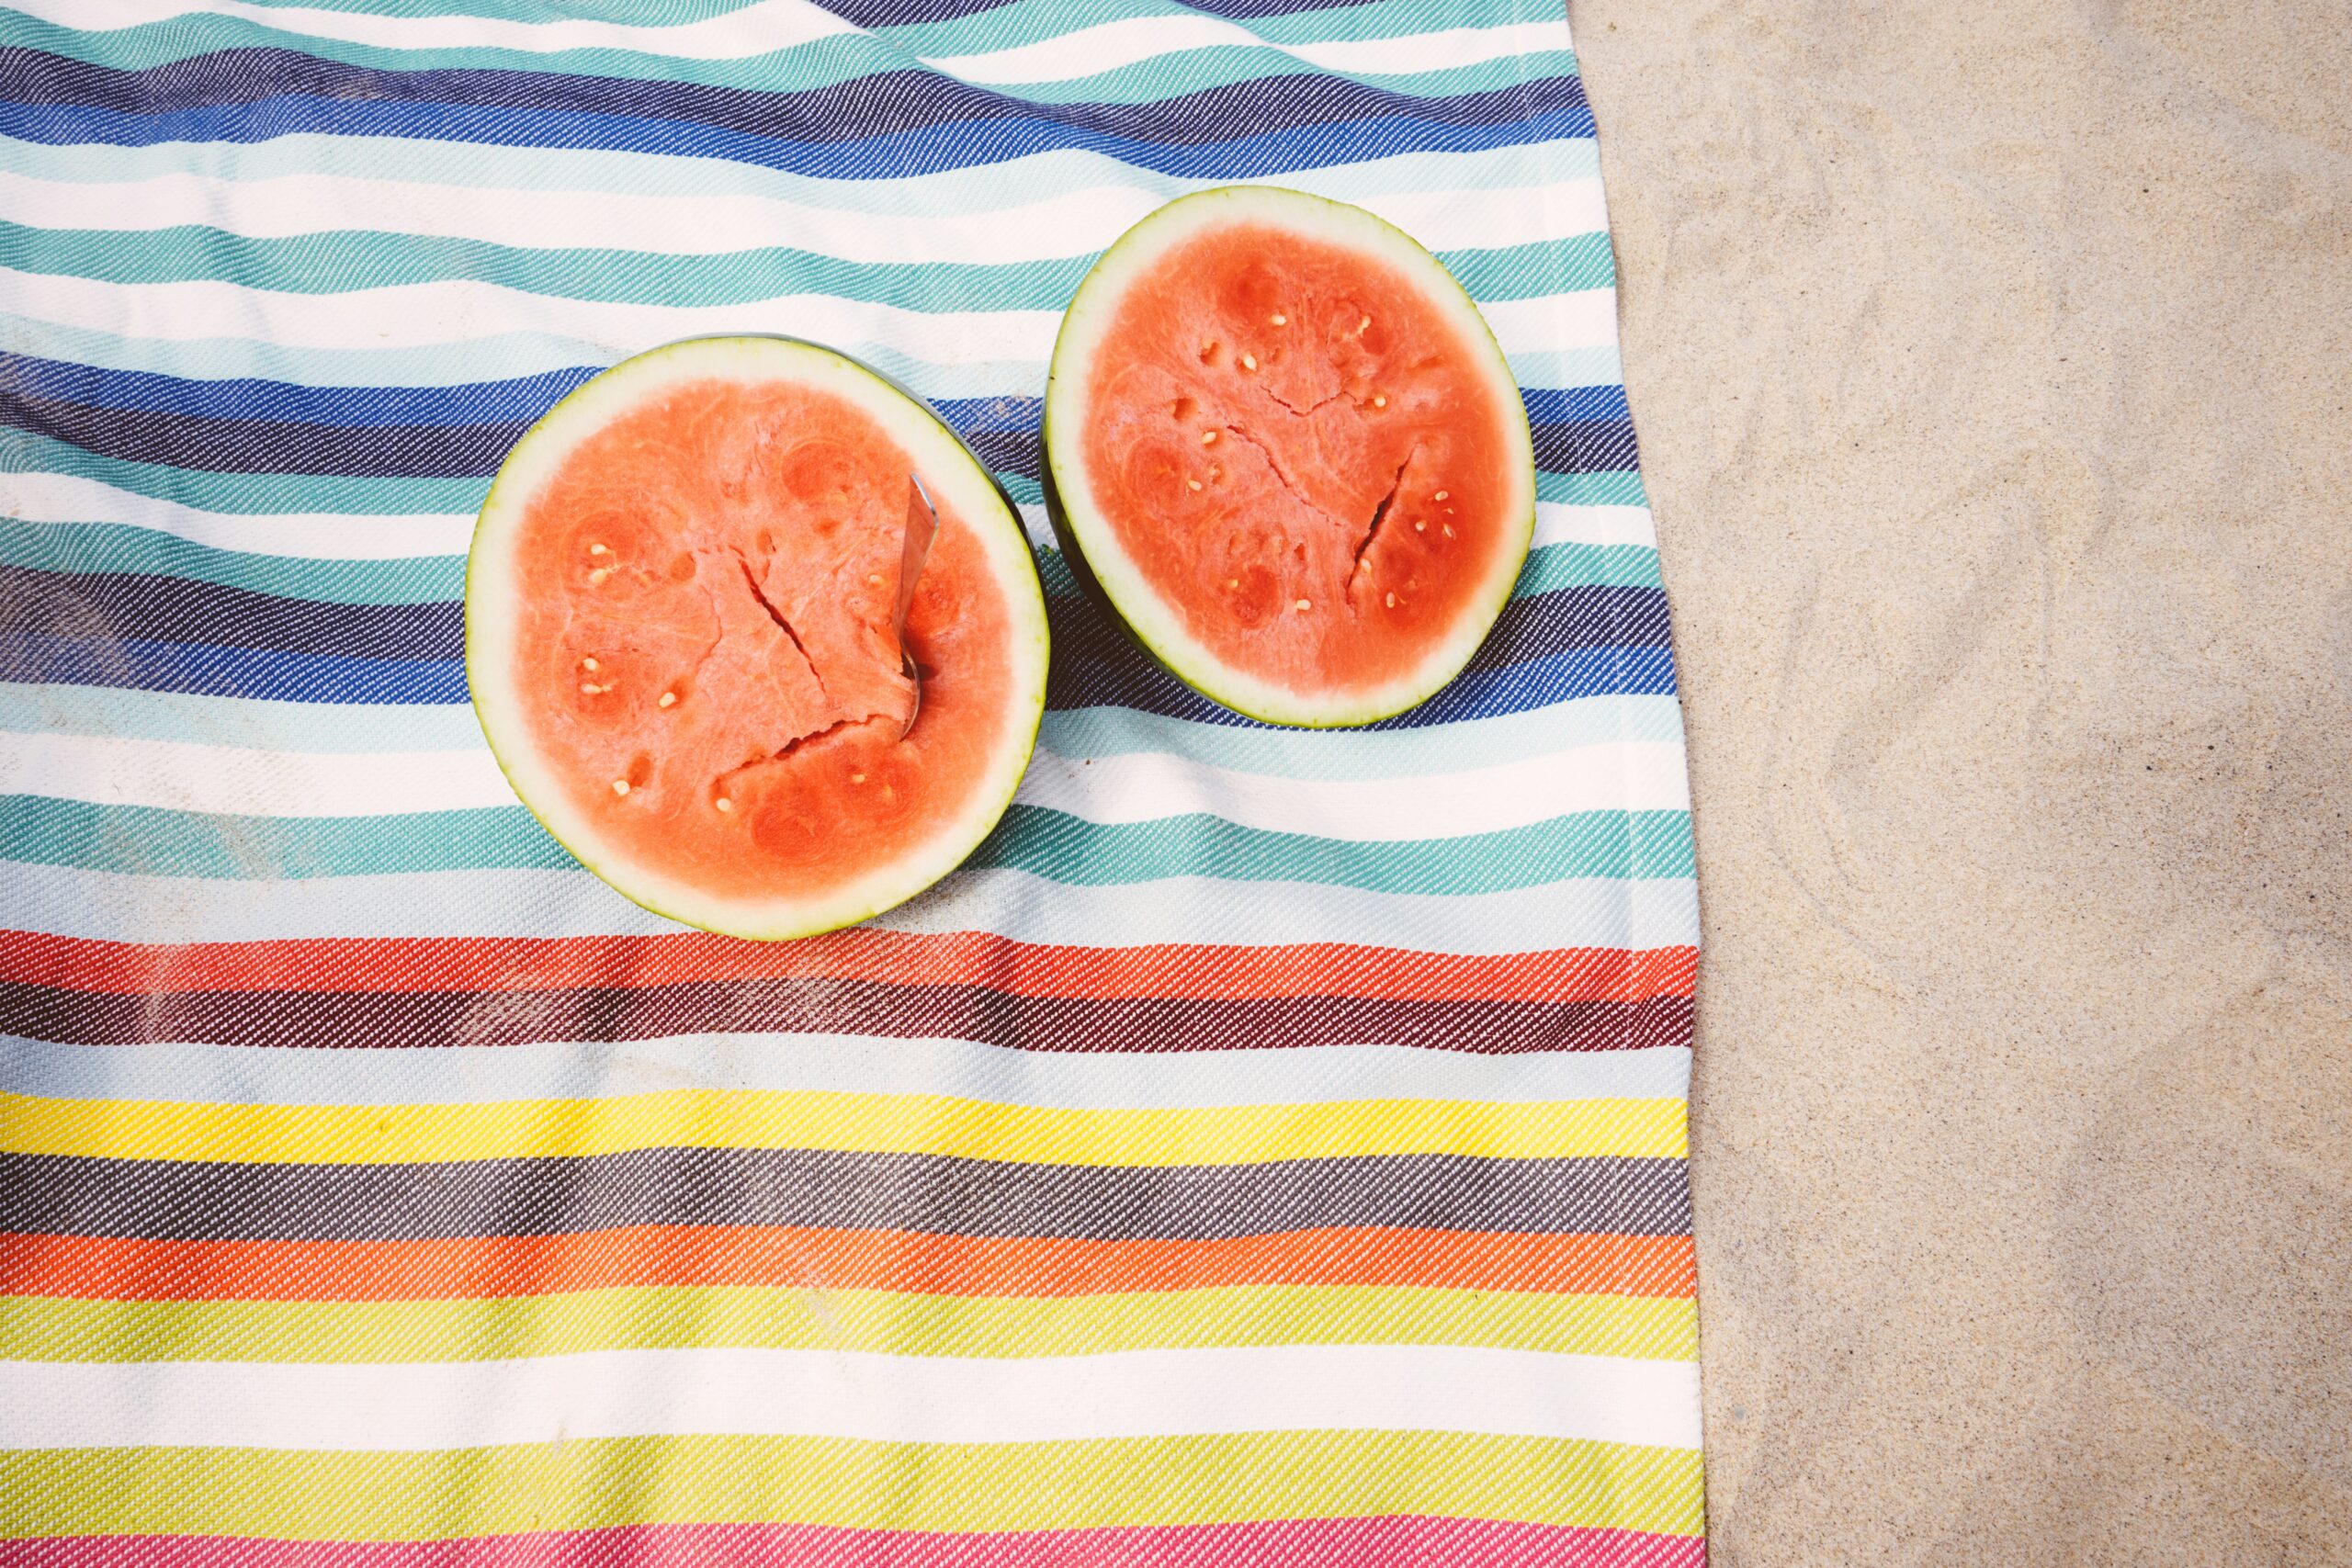 Watermelon on top of a beach towel